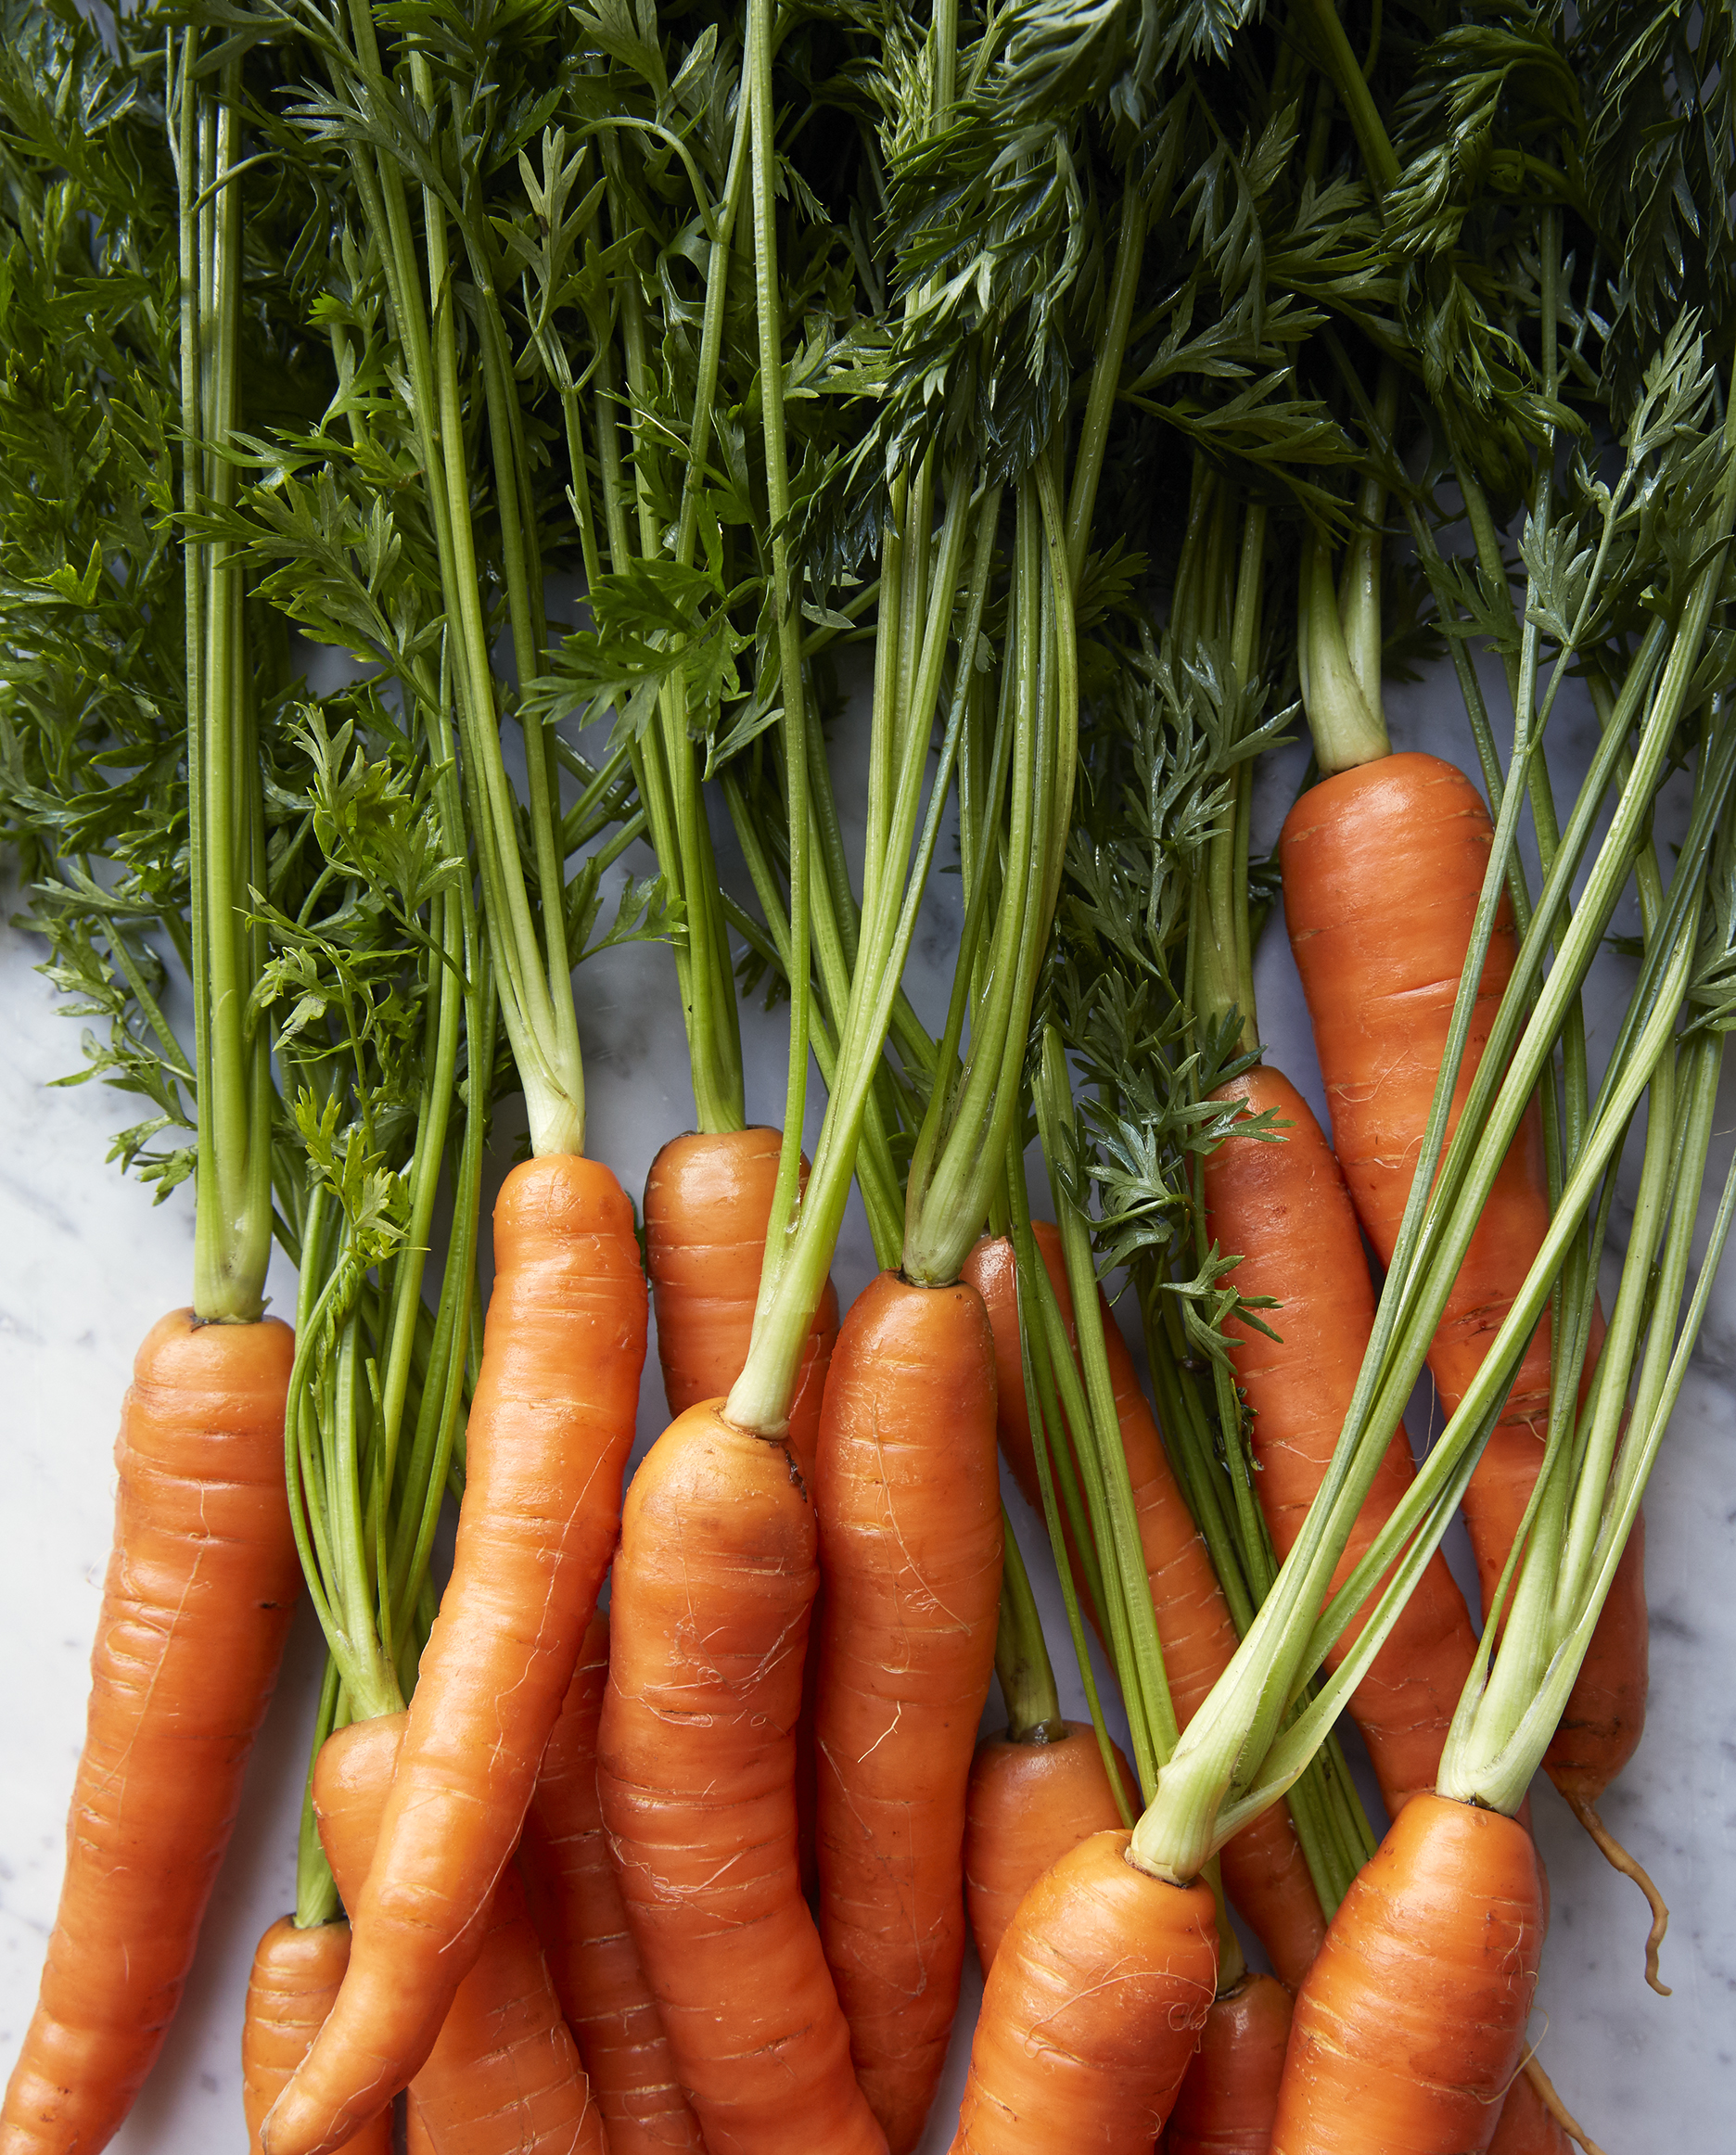 Burggraaf_Charity-Seattle_Food_Photographer-Carrots.jpg